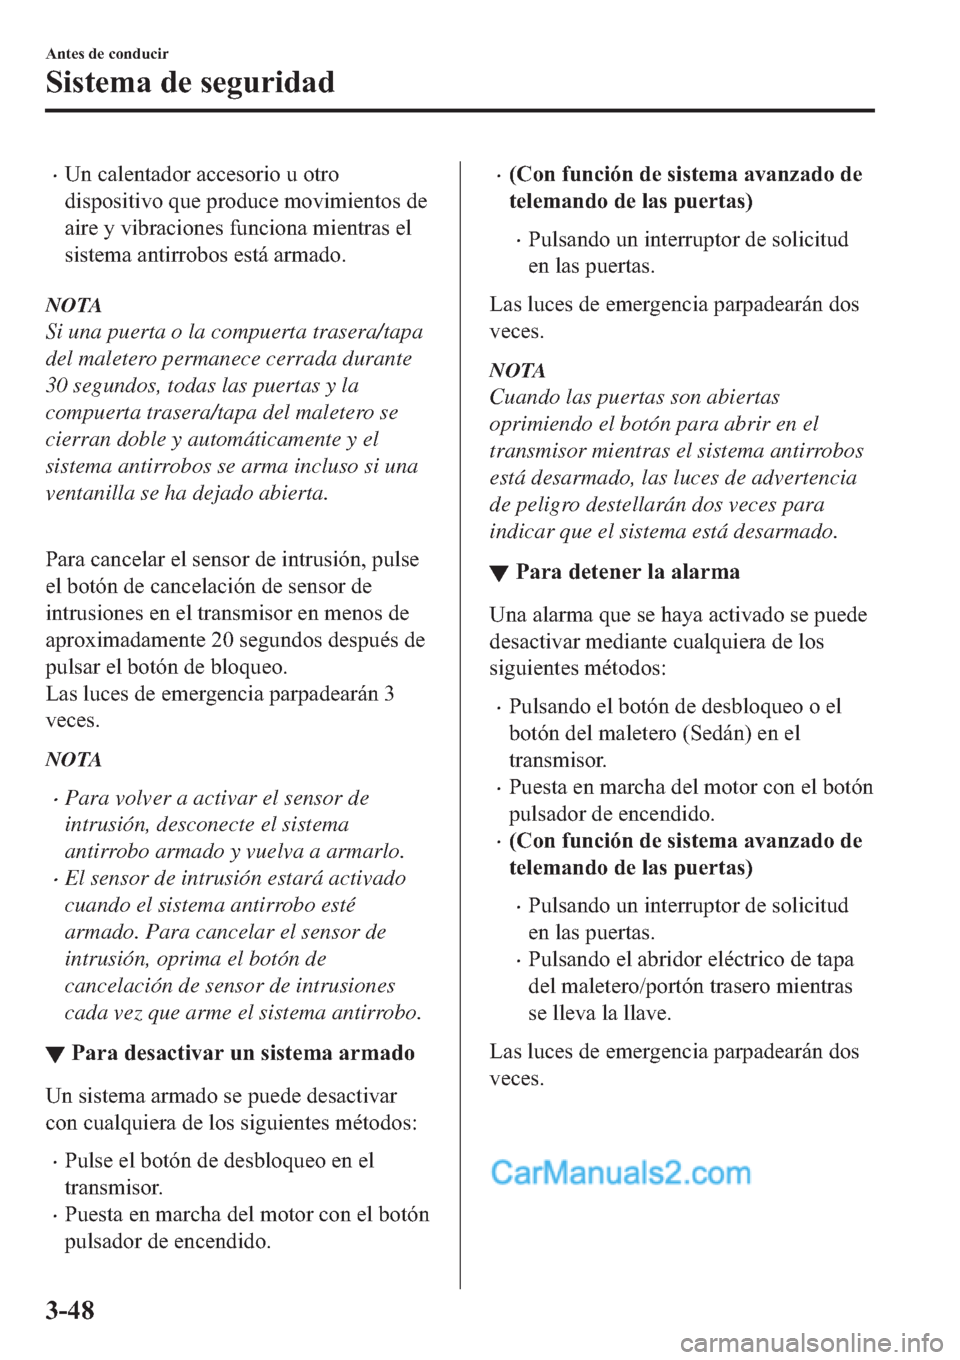 MAZDA MODEL 2 2019  Manual del propietario (in Spanish) �x�8�Q��F�D�O�H�Q�W�D�G�R�U��D�F�F�H�V�R�U�L�R��X��R�W�U�R
�G�L�V�S�R�V�L�W�L�Y�R��T�X�H��S�U�R�G�X�F�H��P�R�Y�L�P�L�H�Q�W�R�V��G�H
�D�L�U�H��\��Y�L�E�U�D�F�L�R�Q�H�V��I�X�Q�F�L�R�Q�D��P�L